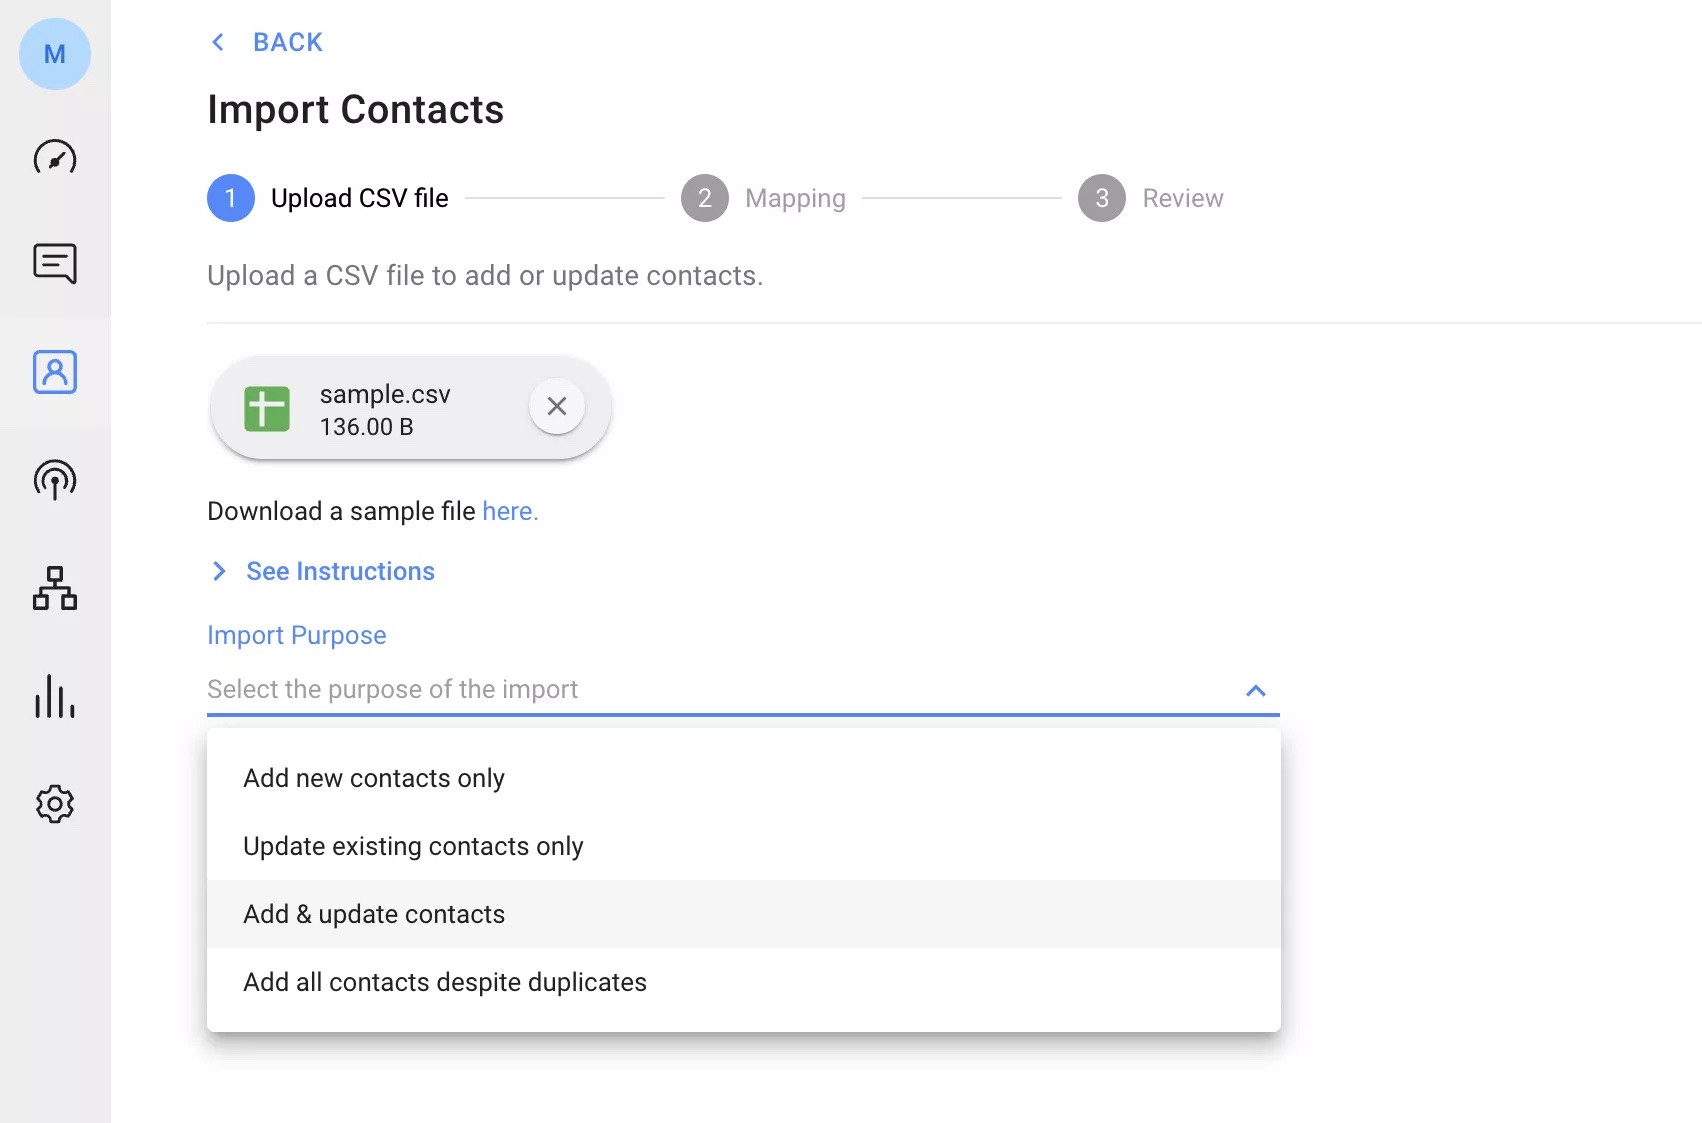 captura de pantalla mostrando cómo importar contactos a través de CSV